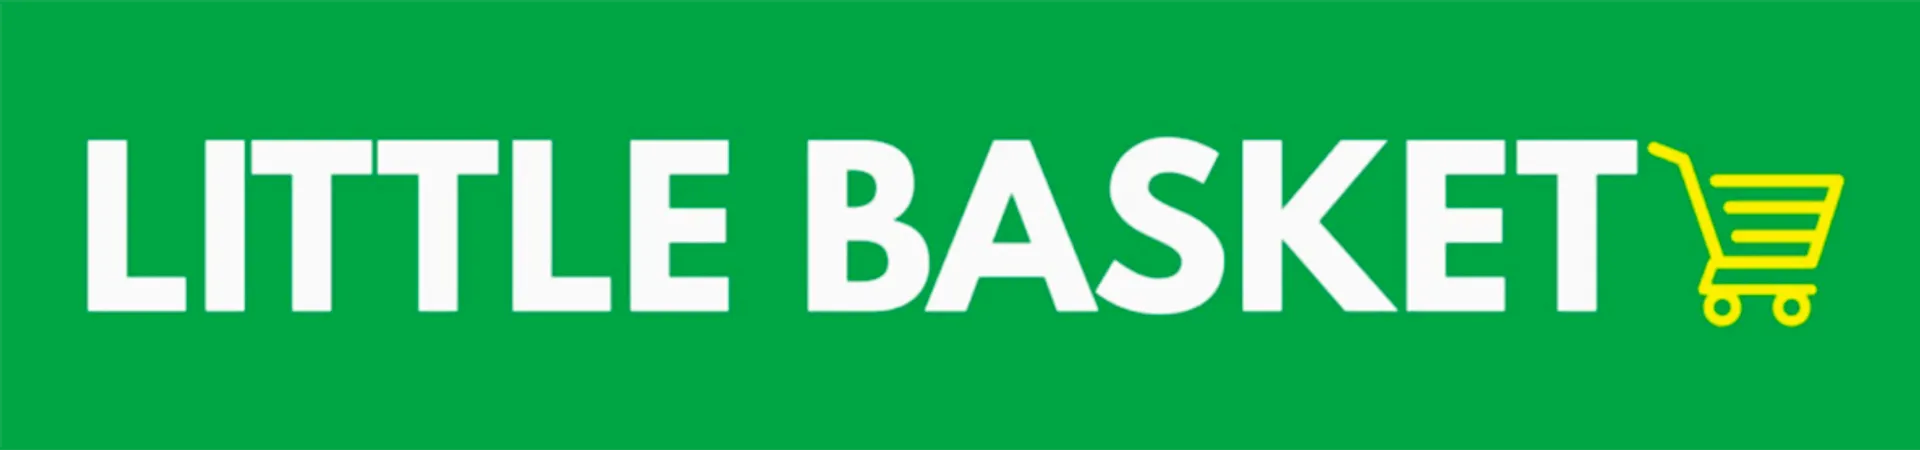 LITTLE BASKET logo